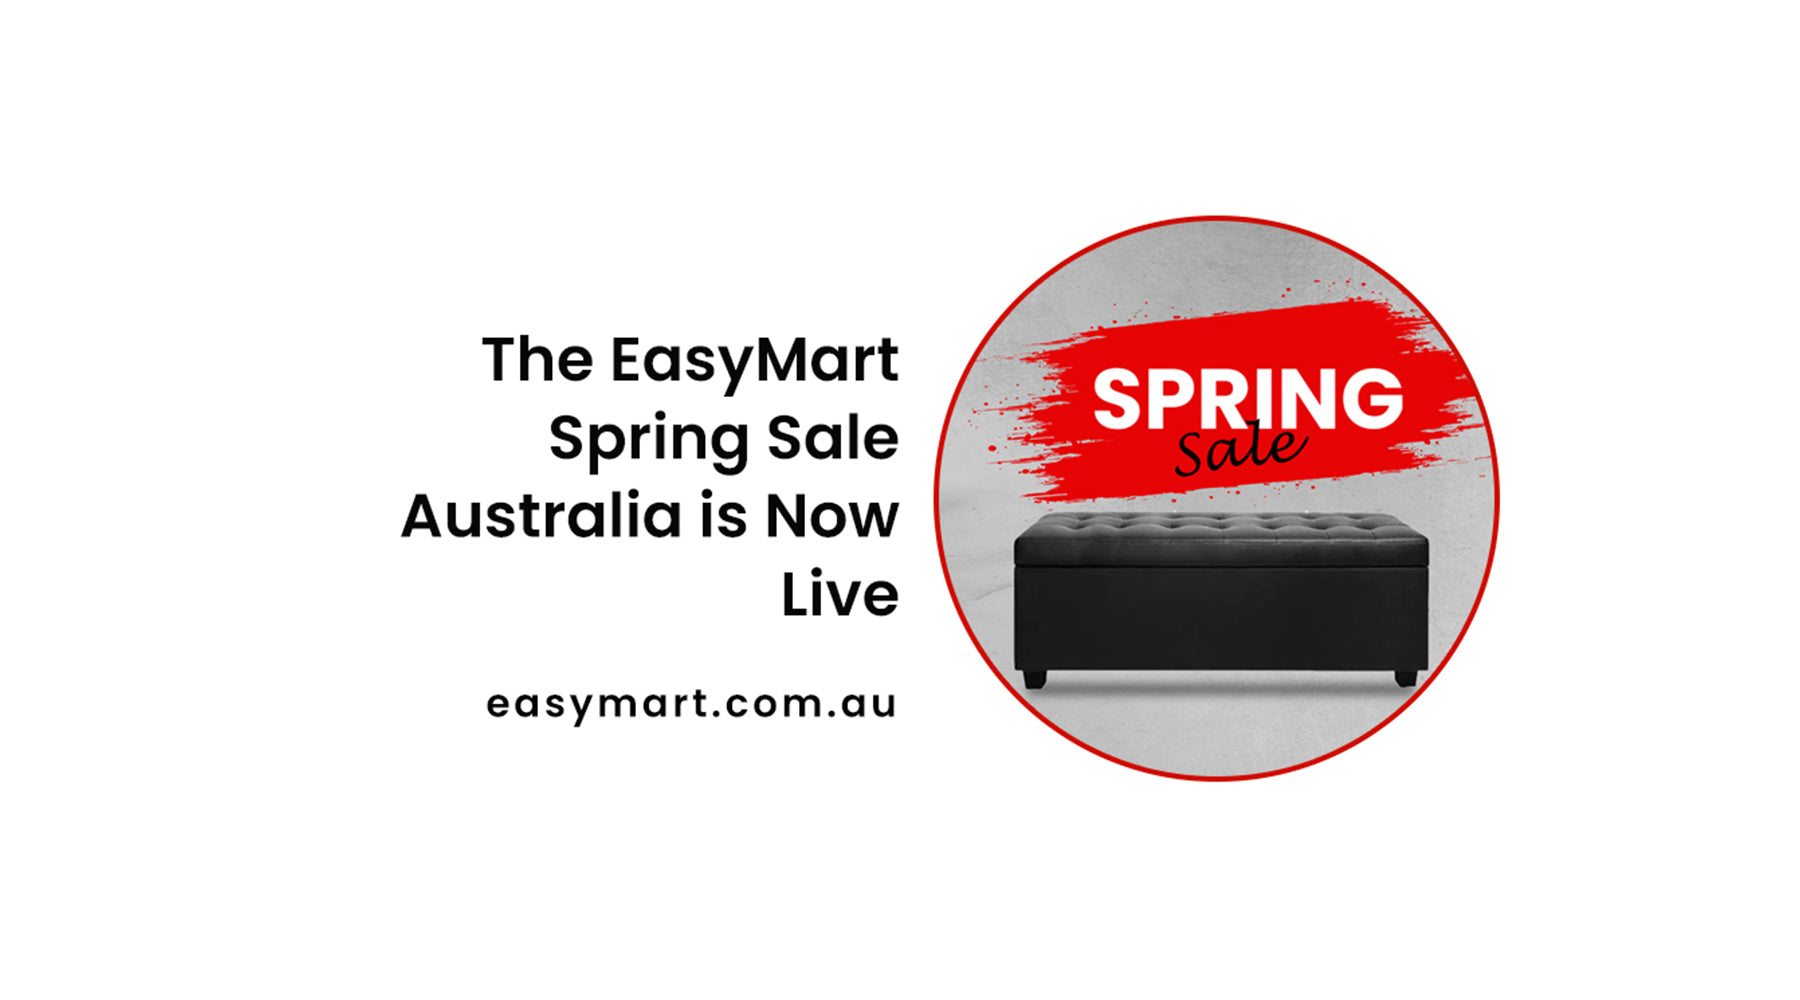 The EasyMart Spring Sale Australia